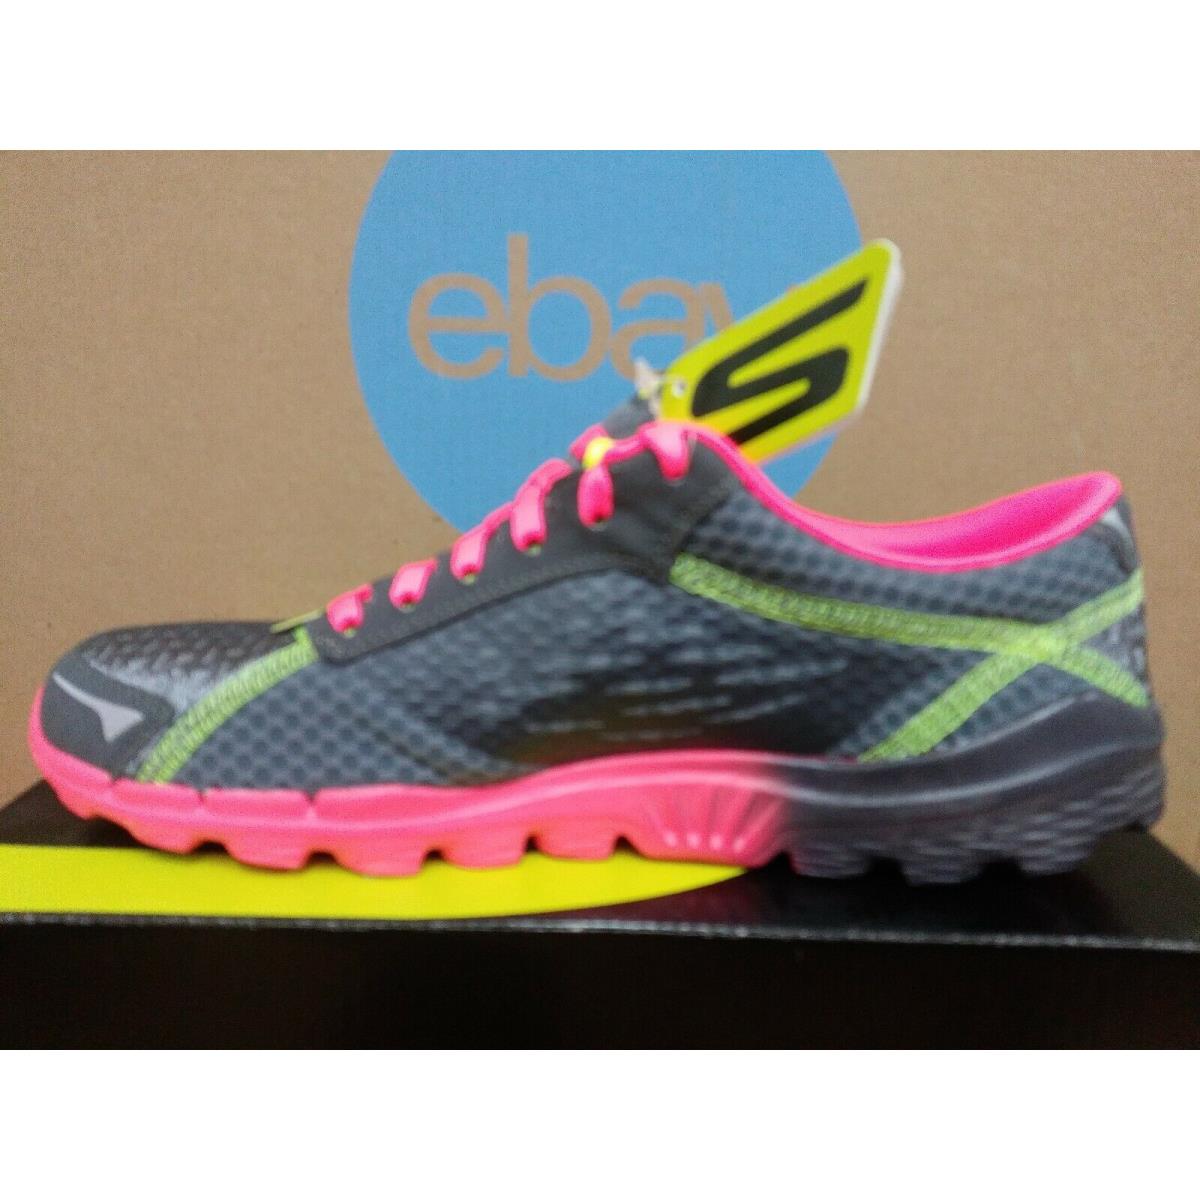 Skechers shoes Run Supreme - Charcoal Hot Pink 6